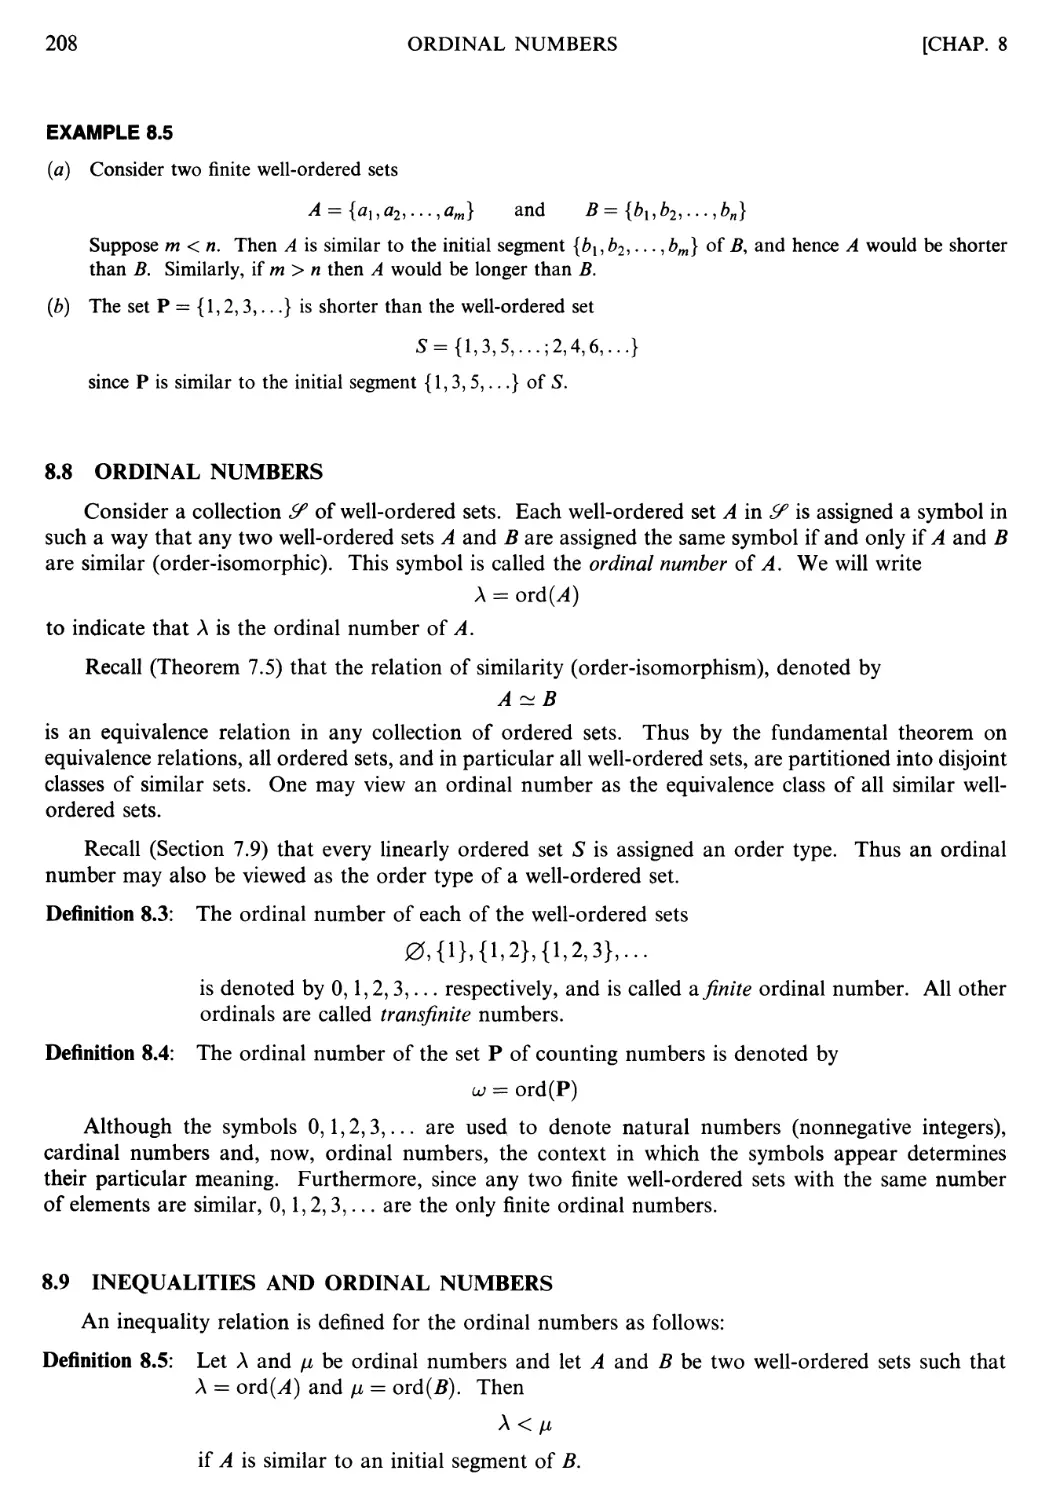 8.8 Ordinal numbers
8.9 Inequalities and ordinal numbers